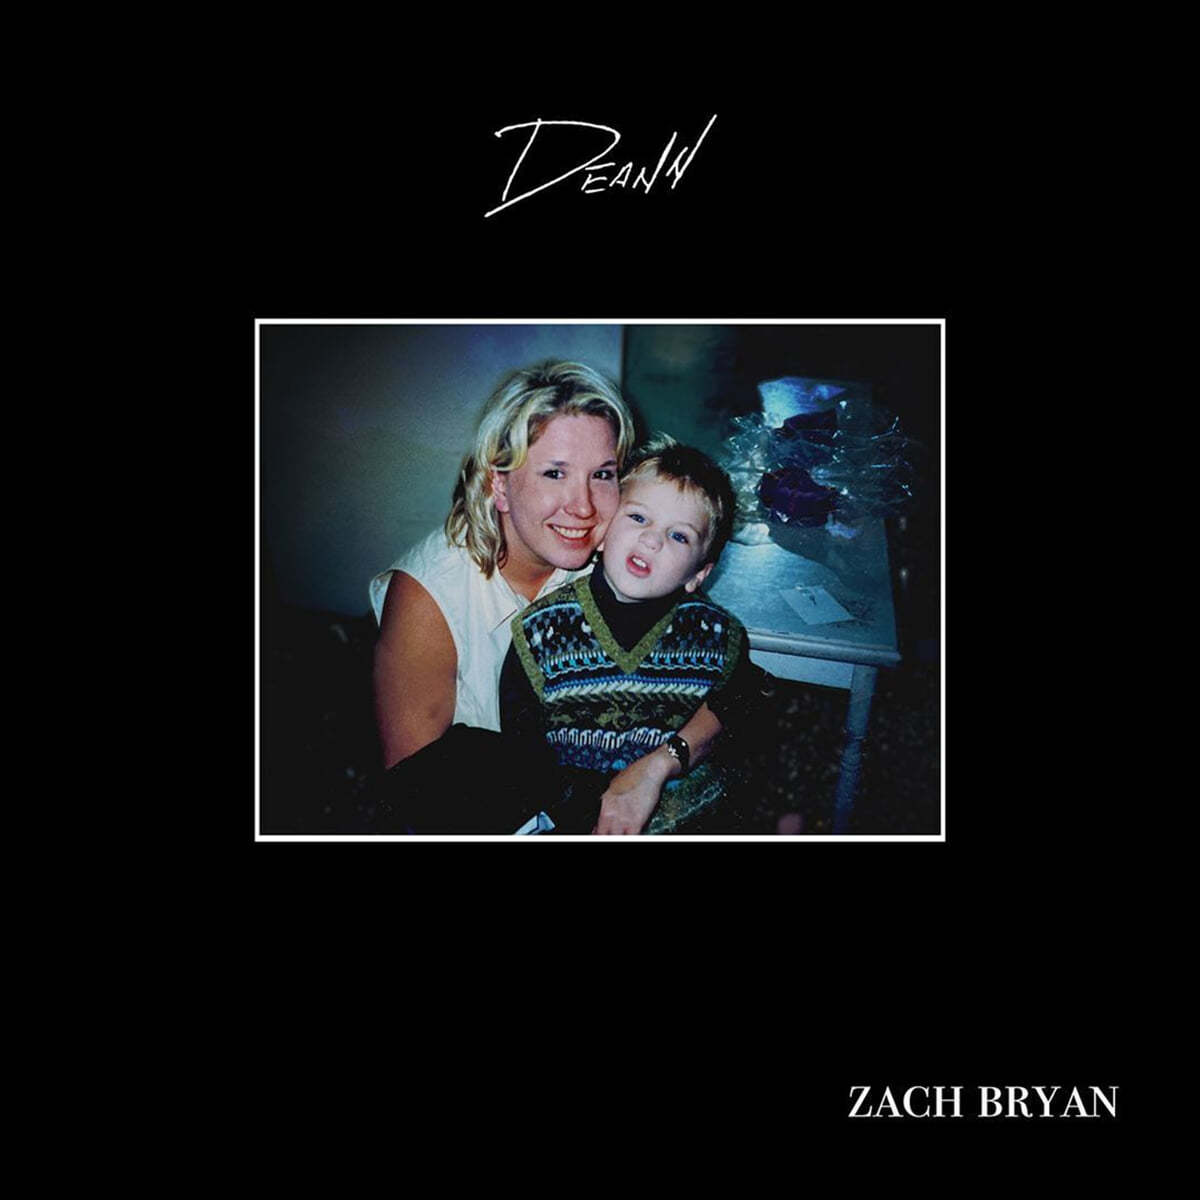 Zach Bryan (자크 브라이언) - 1집 DeAnn [LP]